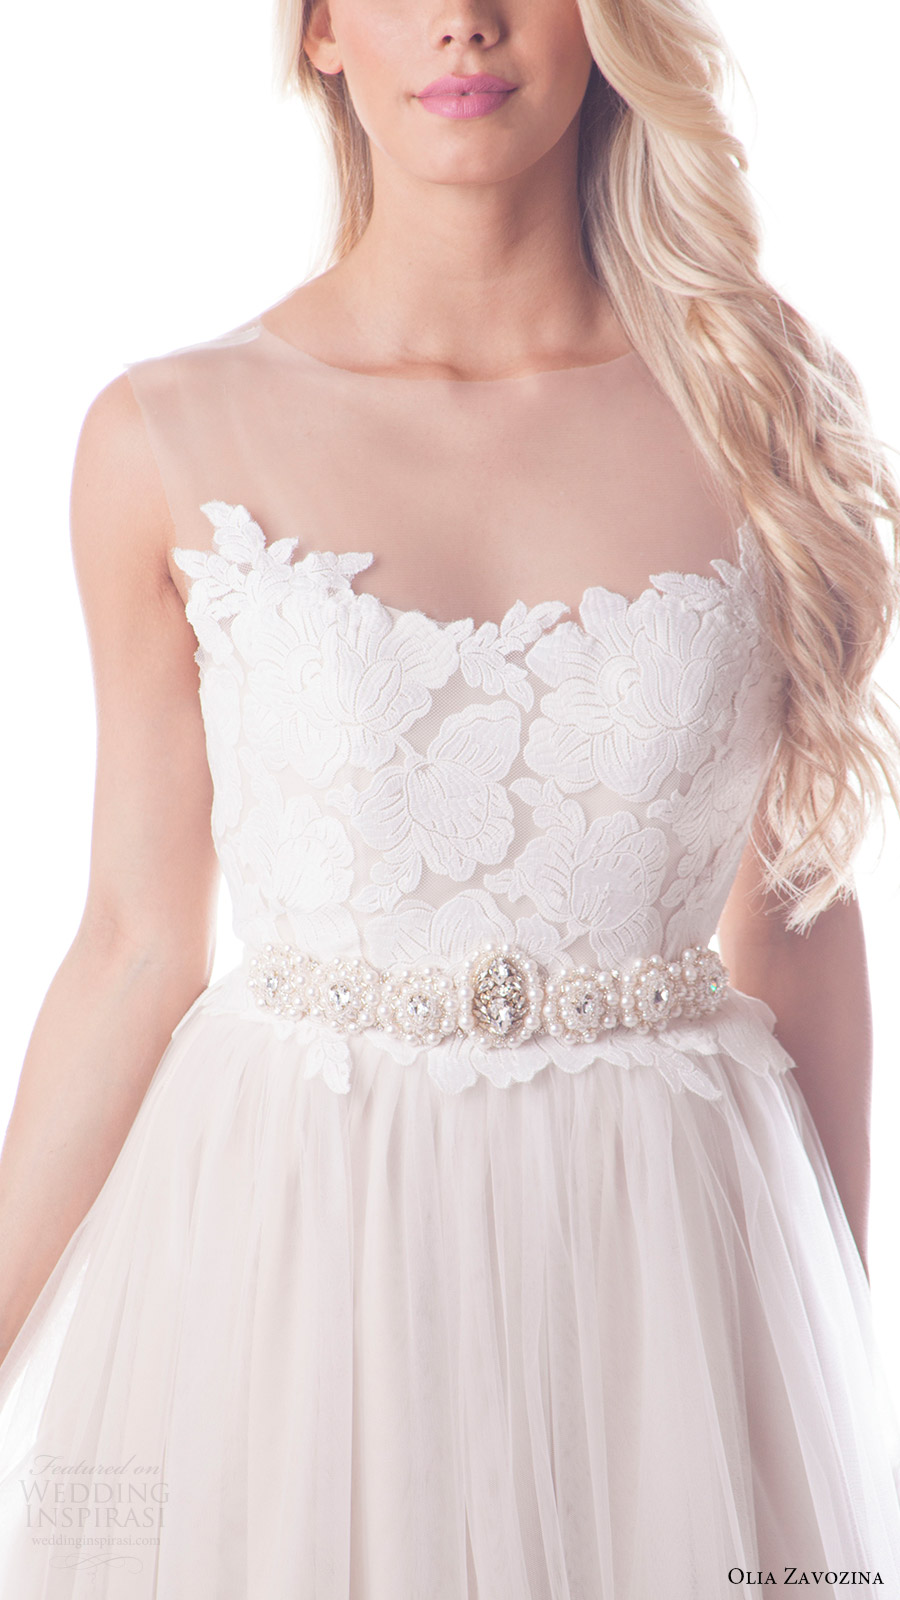 olia zavozina bridal spring 2017 sleeveless illusion neck ball gown wedding dress (elena) zfv